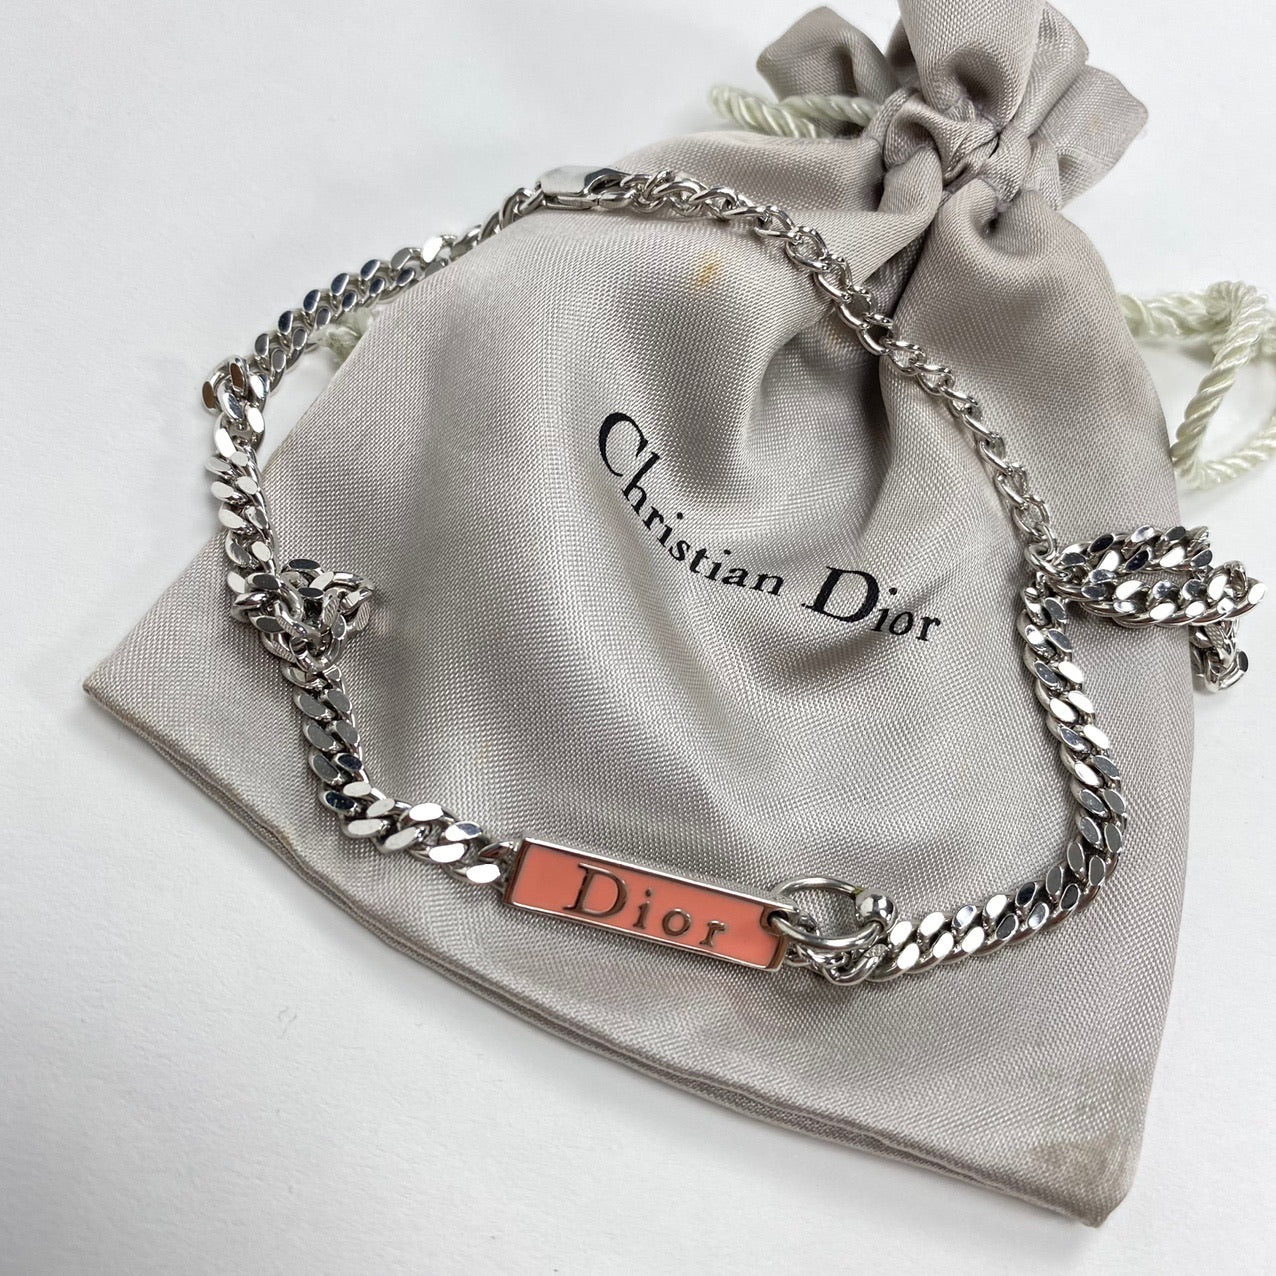 Christian Dior Piercing Choker Necklace